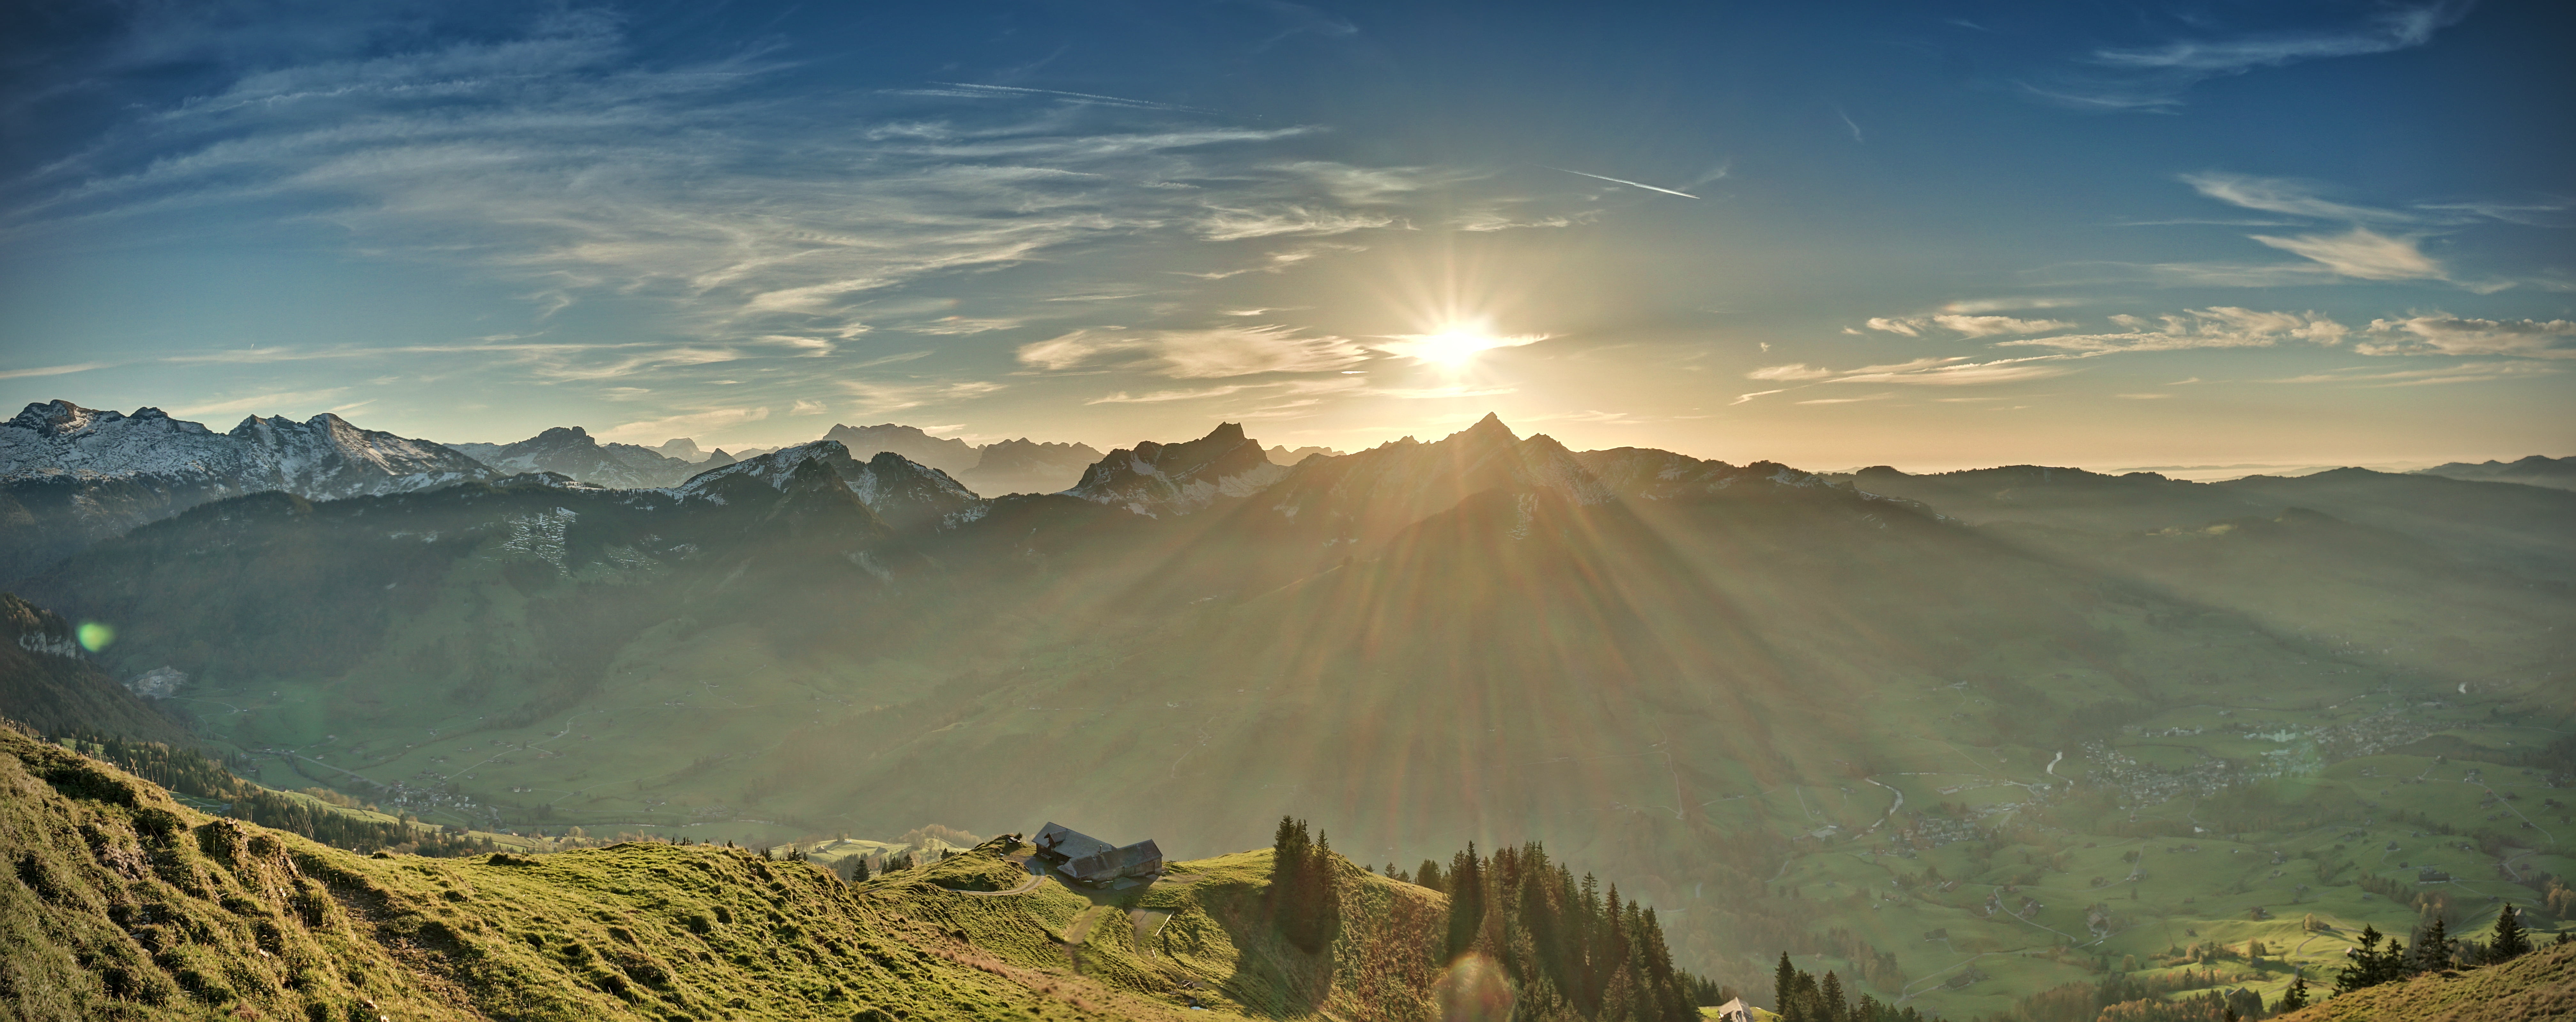 landscape photo of sunrise over mountain hills, stockberg